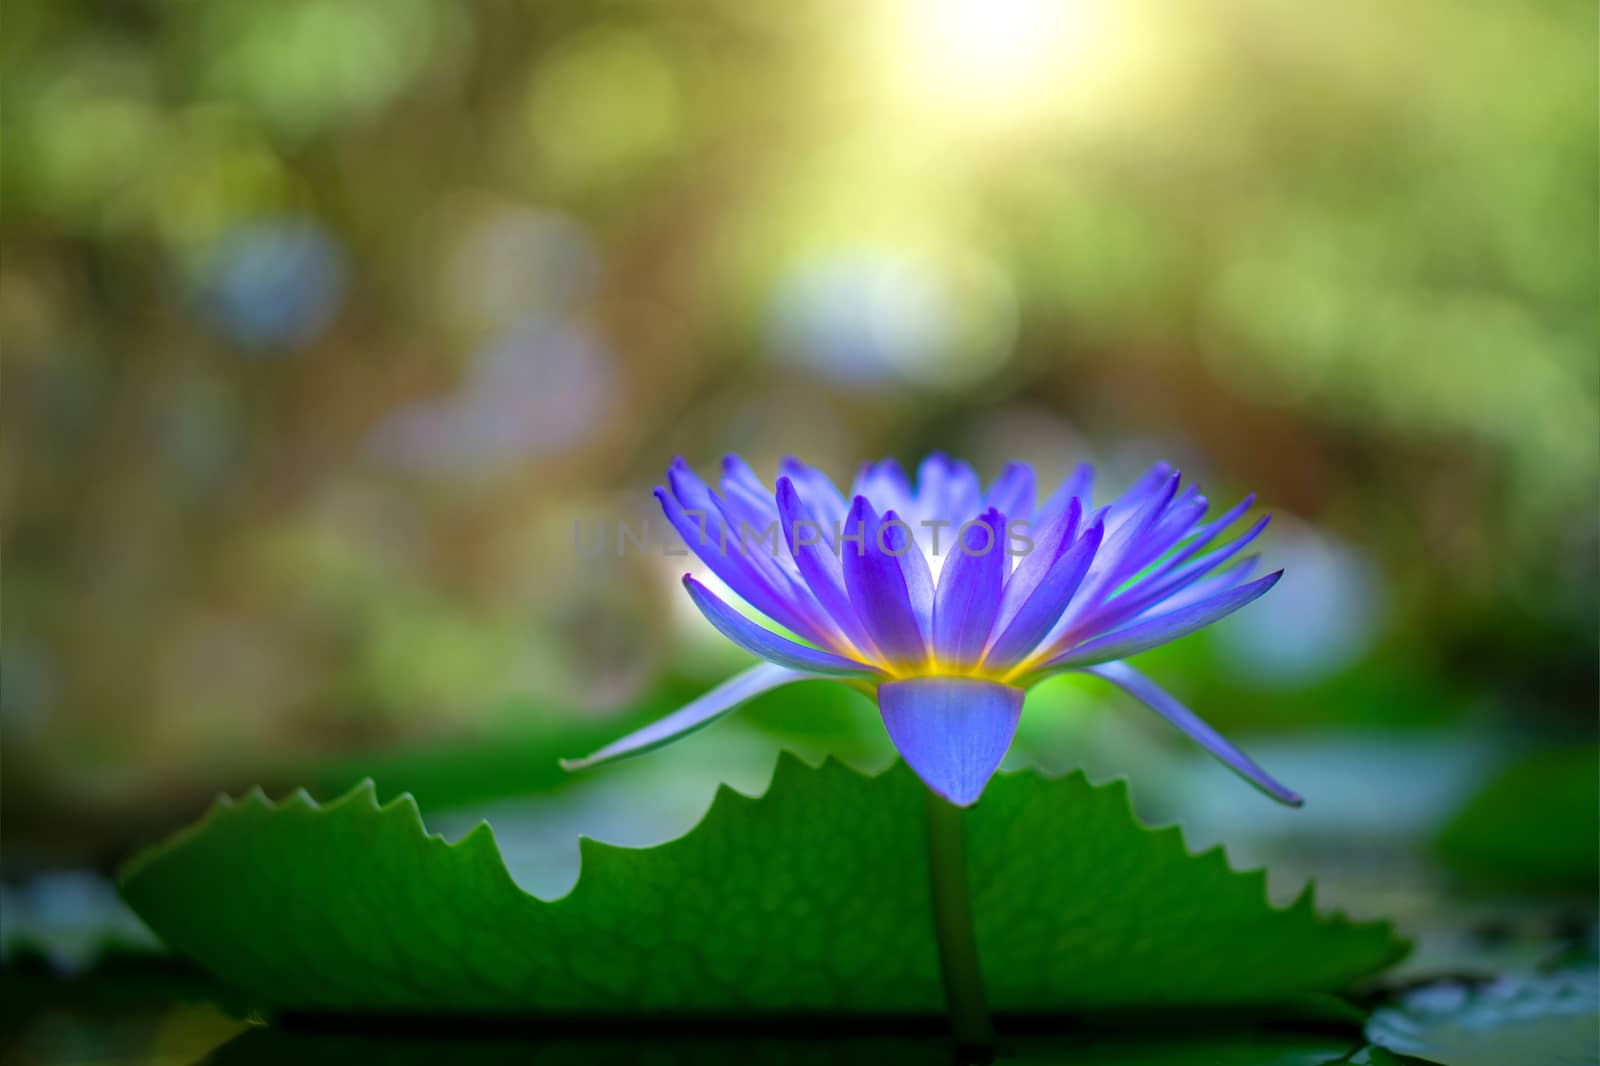 Violet thai water lily or lotus flower.